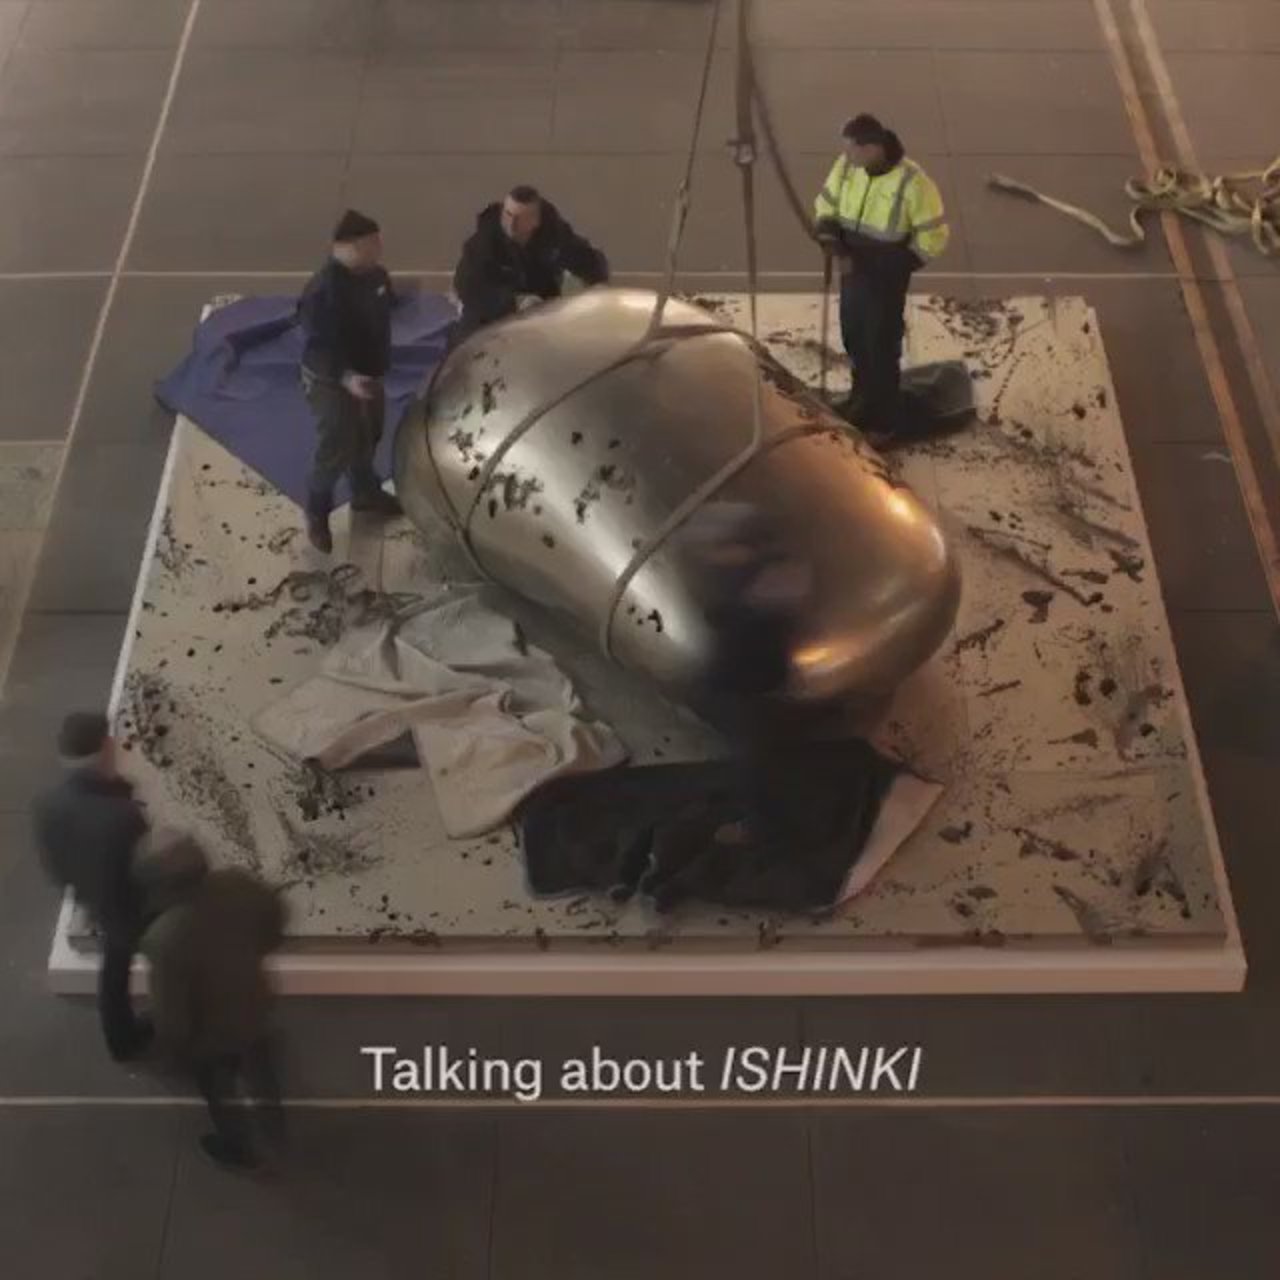 See Kan Yasuda’s monumental “Ishinki“ being installed in Rockefeller Center. https://t.co/bSBfWr6q4u